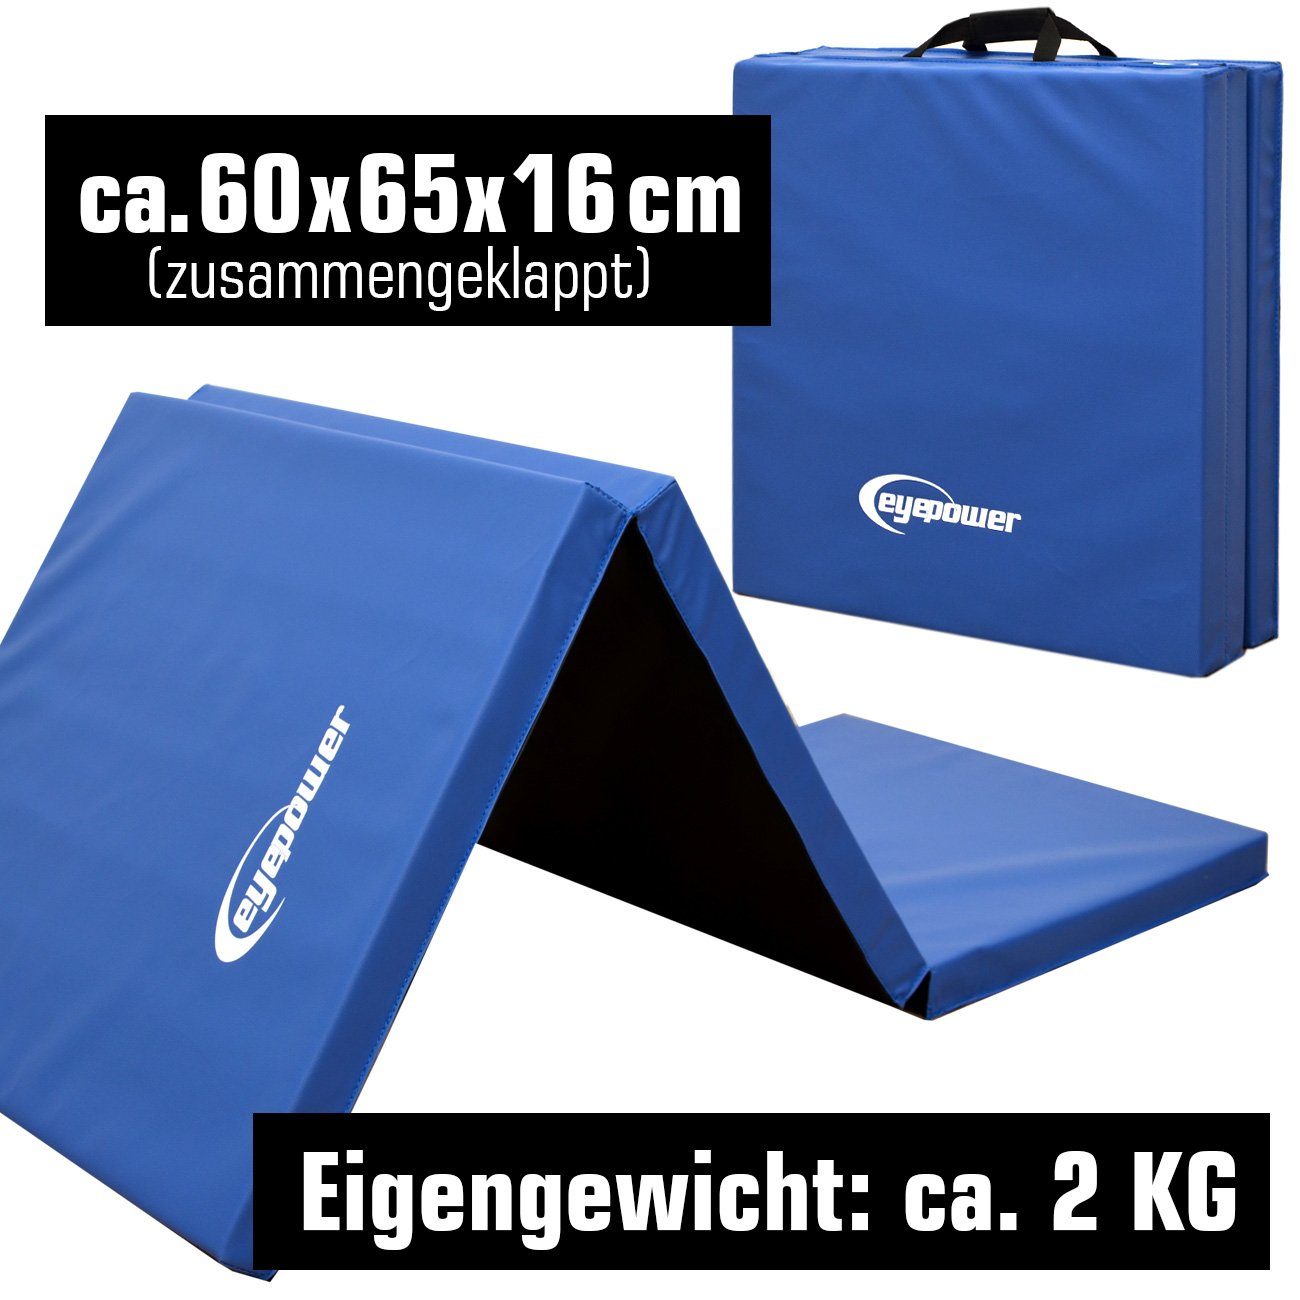 eyepower Fitnessmatte XL Gymnastikmatte 190x60x5cm - Turnmatte, Faltbare Robust extra